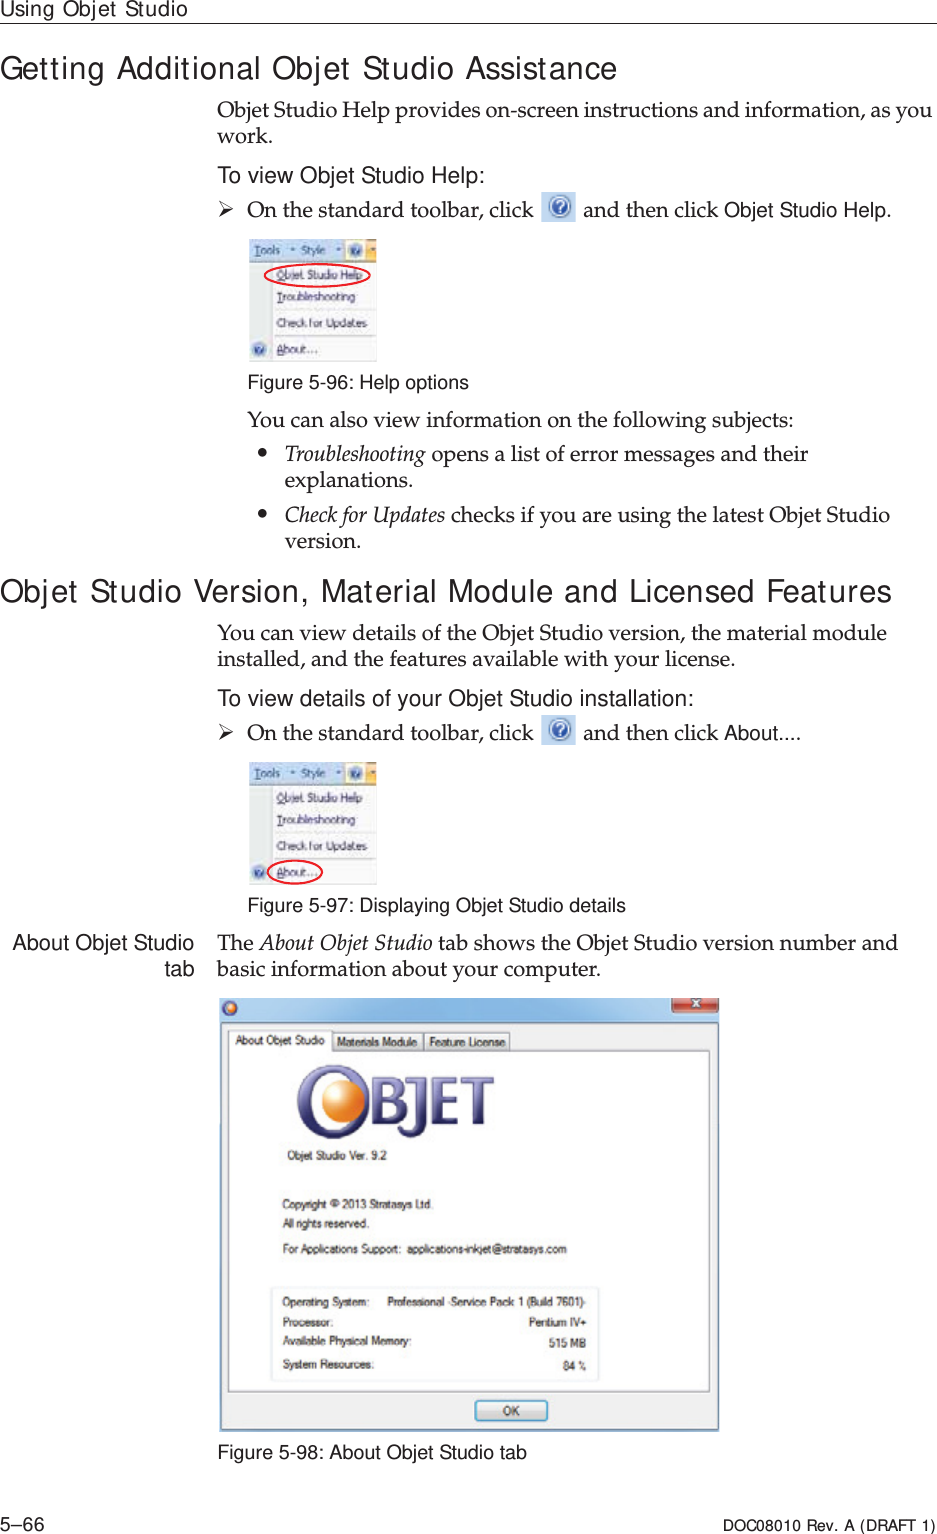 Using Objet Studio5–66 DOC08010 Rev. A (DRAFT 1)Getting Additional Objet Studio AssistanceObjetȱStudioȱHelpȱprovidesȱonȬscreenȱinstructionsȱandȱinformation,ȱasȱyouȱwork.To view Objet Studio Help:¾Onȱtheȱstandardȱtoolbar,ȱclickȱȱandȱthenȱclickȱObjet Studio Help.Figure 5-96: Help optionsYouȱcanȱalsoȱviewȱinformationȱonȱtheȱfollowingȱsubjects:•Troubleshootingȱopensȱaȱlistȱofȱerrorȱmessagesȱandȱtheirȱexplanations.•CheckȱforȱUpdatesȱchecksȱifȱyouȱareȱusingȱtheȱlatestȱObjetȱStudioȱversion.ȱObjet Studio Version, Material Module and Licensed FeaturesYouȱcanȱviewȱdetailsȱofȱtheȱObjetȱStudioȱversion,ȱtheȱmaterialȱmoduleȱinstalled,ȱandȱtheȱfeaturesȱavailableȱwithȱyourȱlicense.To view details of your Objet Studio installation:¾Onȱtheȱstandardȱtoolbar,ȱclickȱȱandȱthenȱclickȱAbout....Figure 5-97: Displaying Objet Studio detailsAbout Objet Studiotab TheȱAboutȱObjetȱStudioȱtabȱshowsȱtheȱObjetȱStudioȱversionȱnumberȱandȱbasicȱinformationȱaboutȱyourȱcomputer.Figure 5-98: About Objet Studio tab